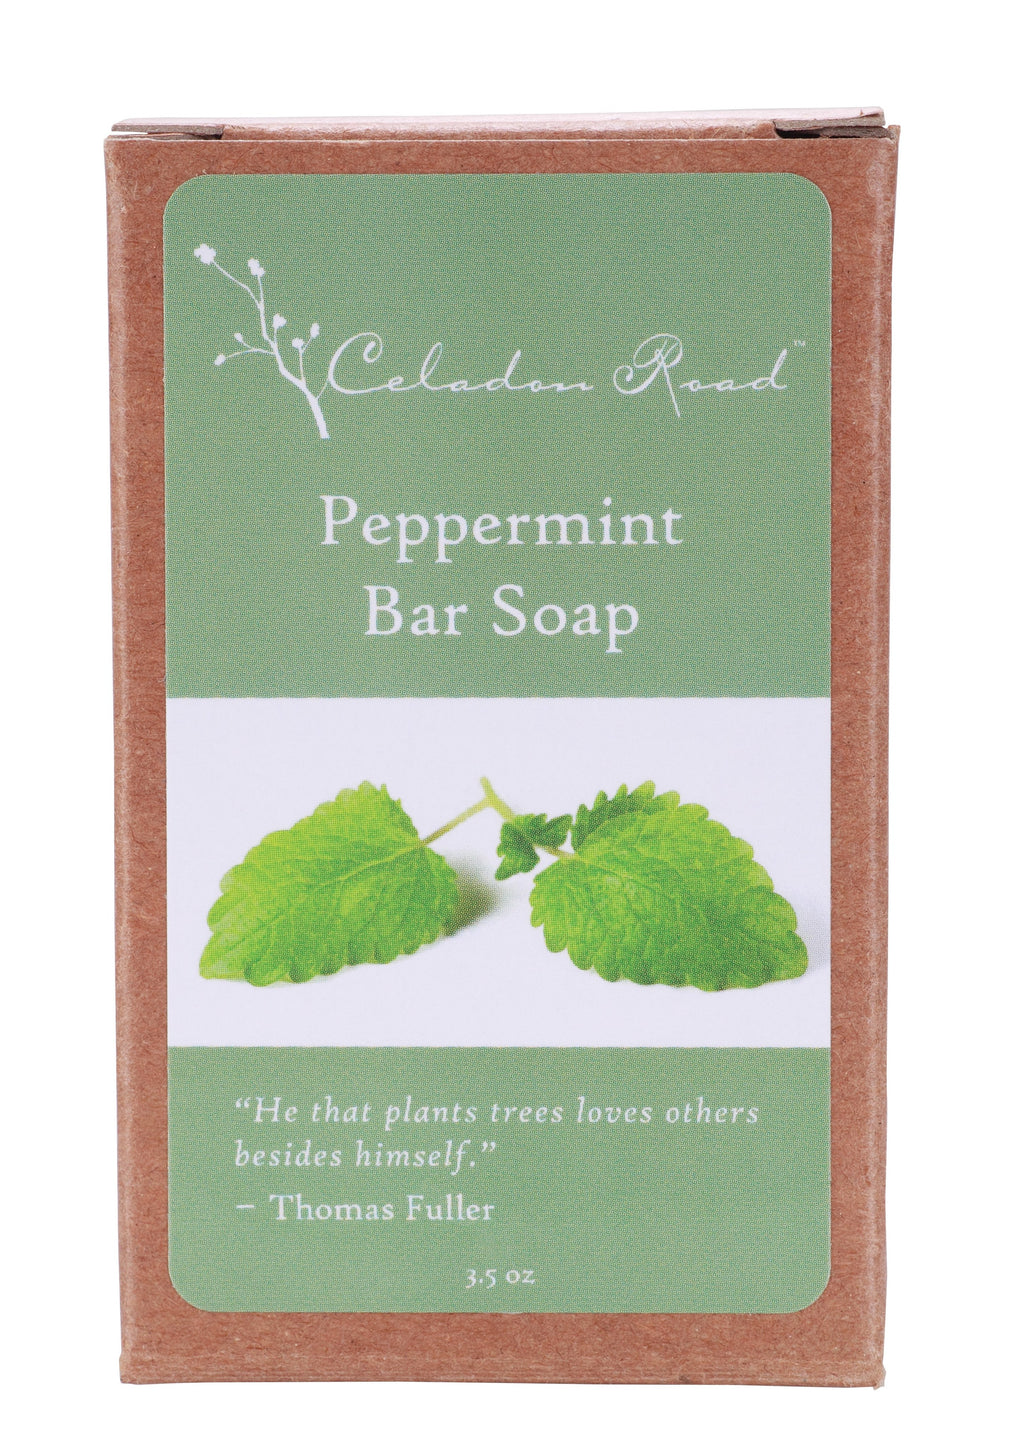 Peppermint Bar Soap- Celadon Road- www.celadonroad.com